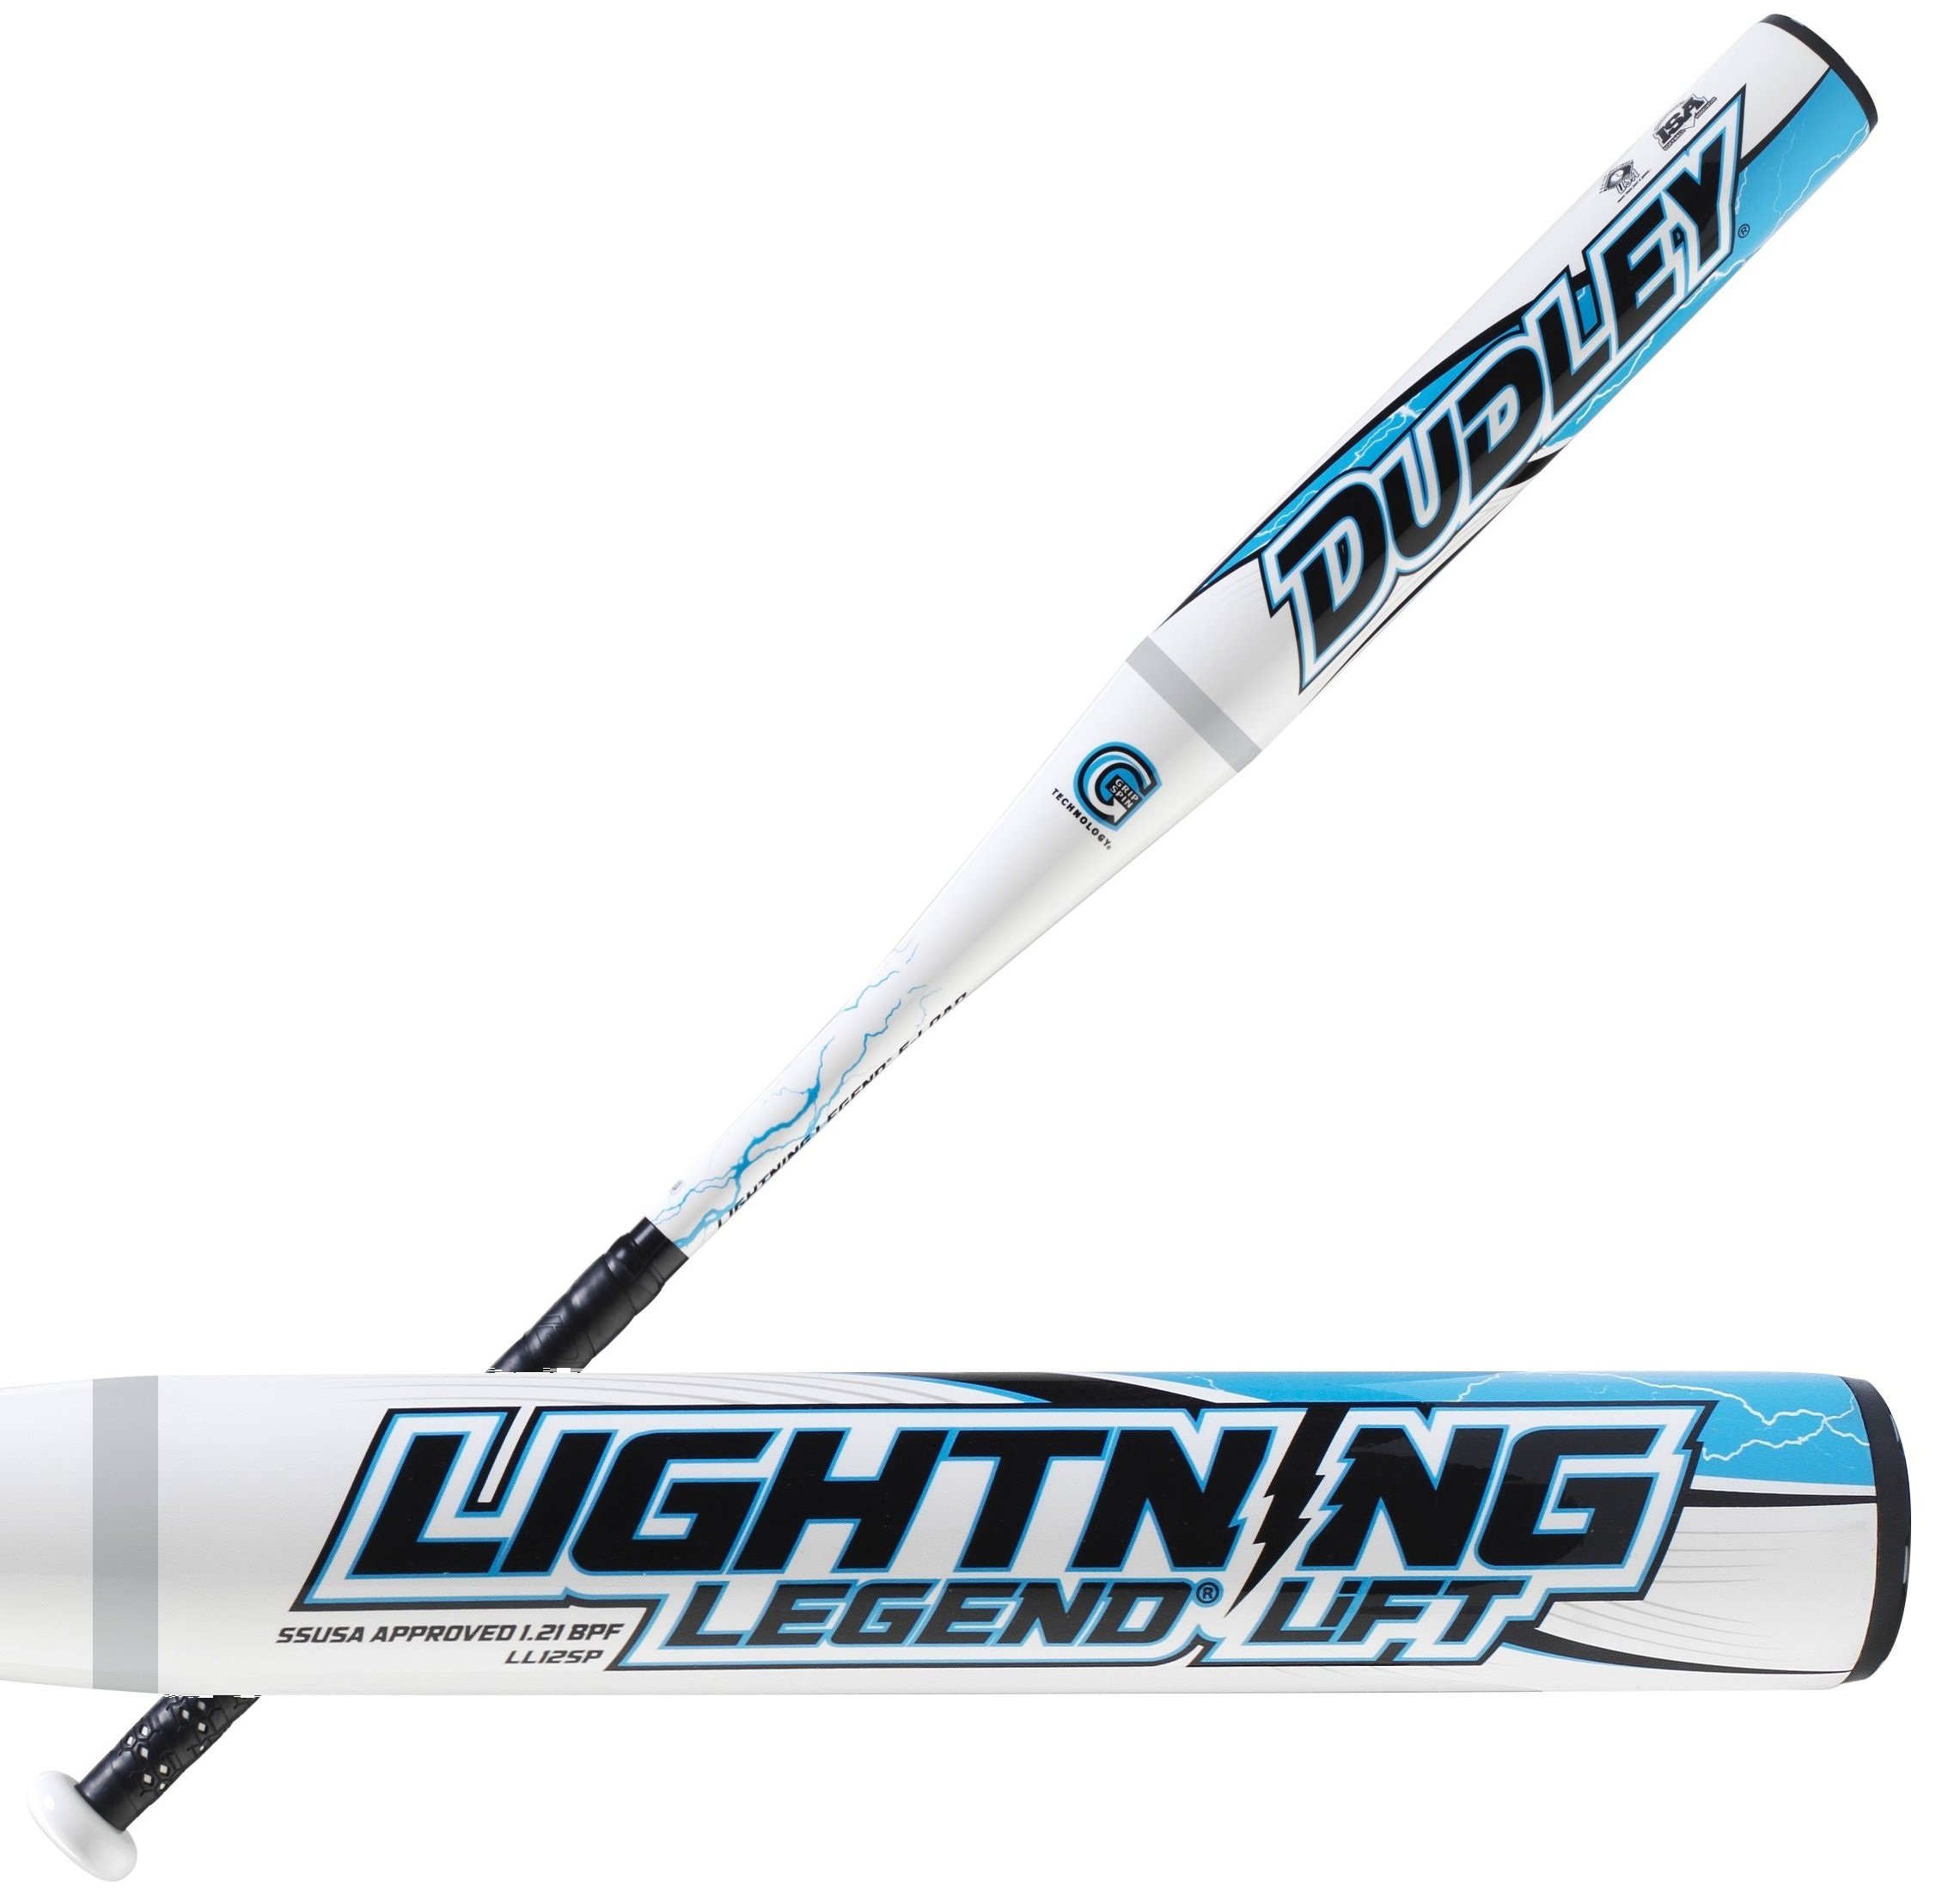 Dudley Lightning Legend Lift   NIW Senior Softball Bat 25oz   LL12SP 